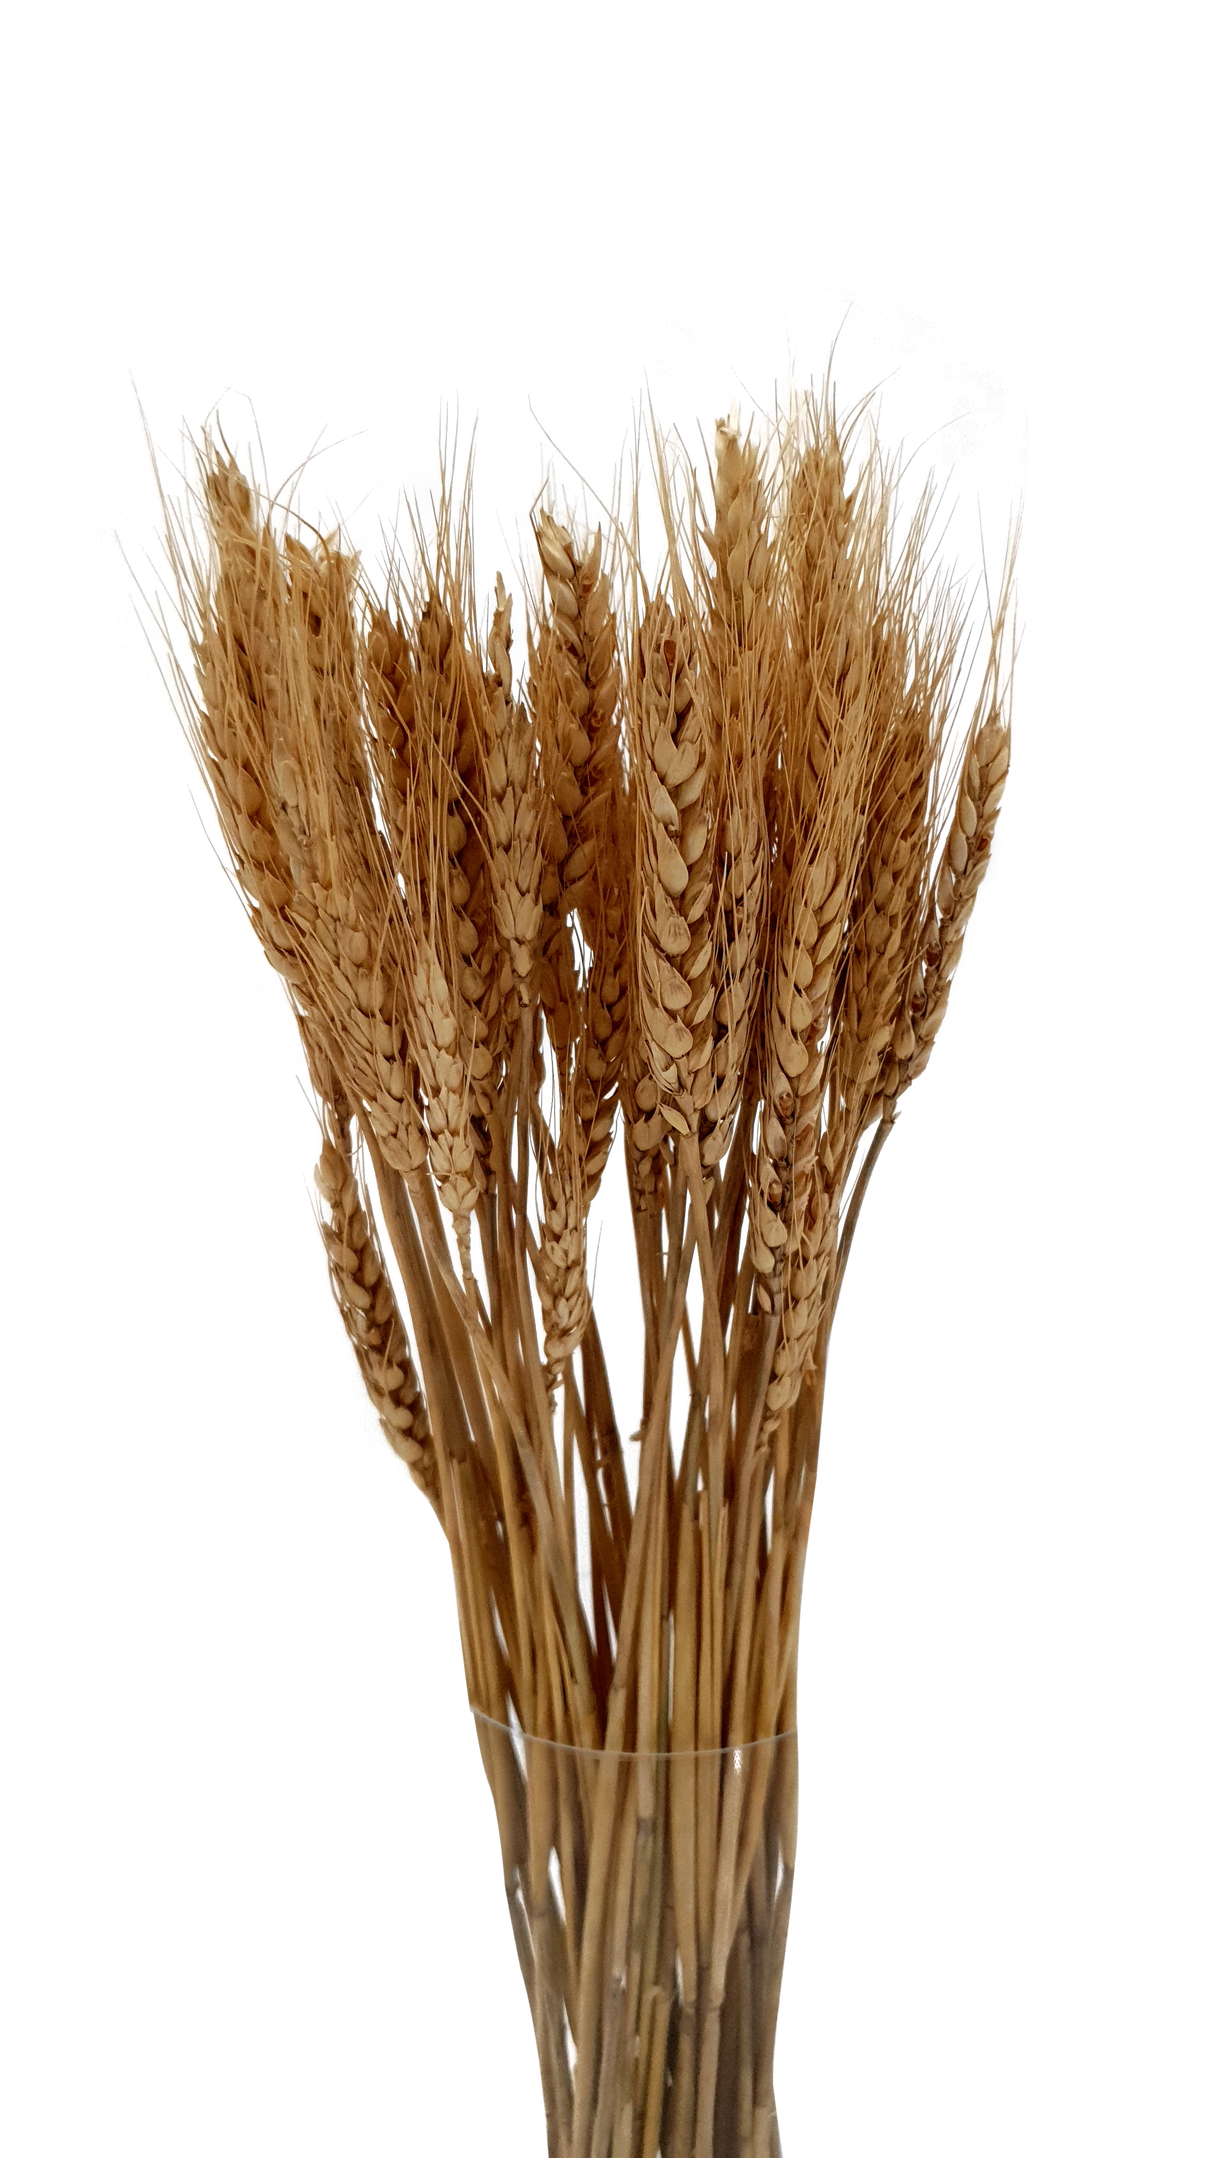 Dry- Wheat